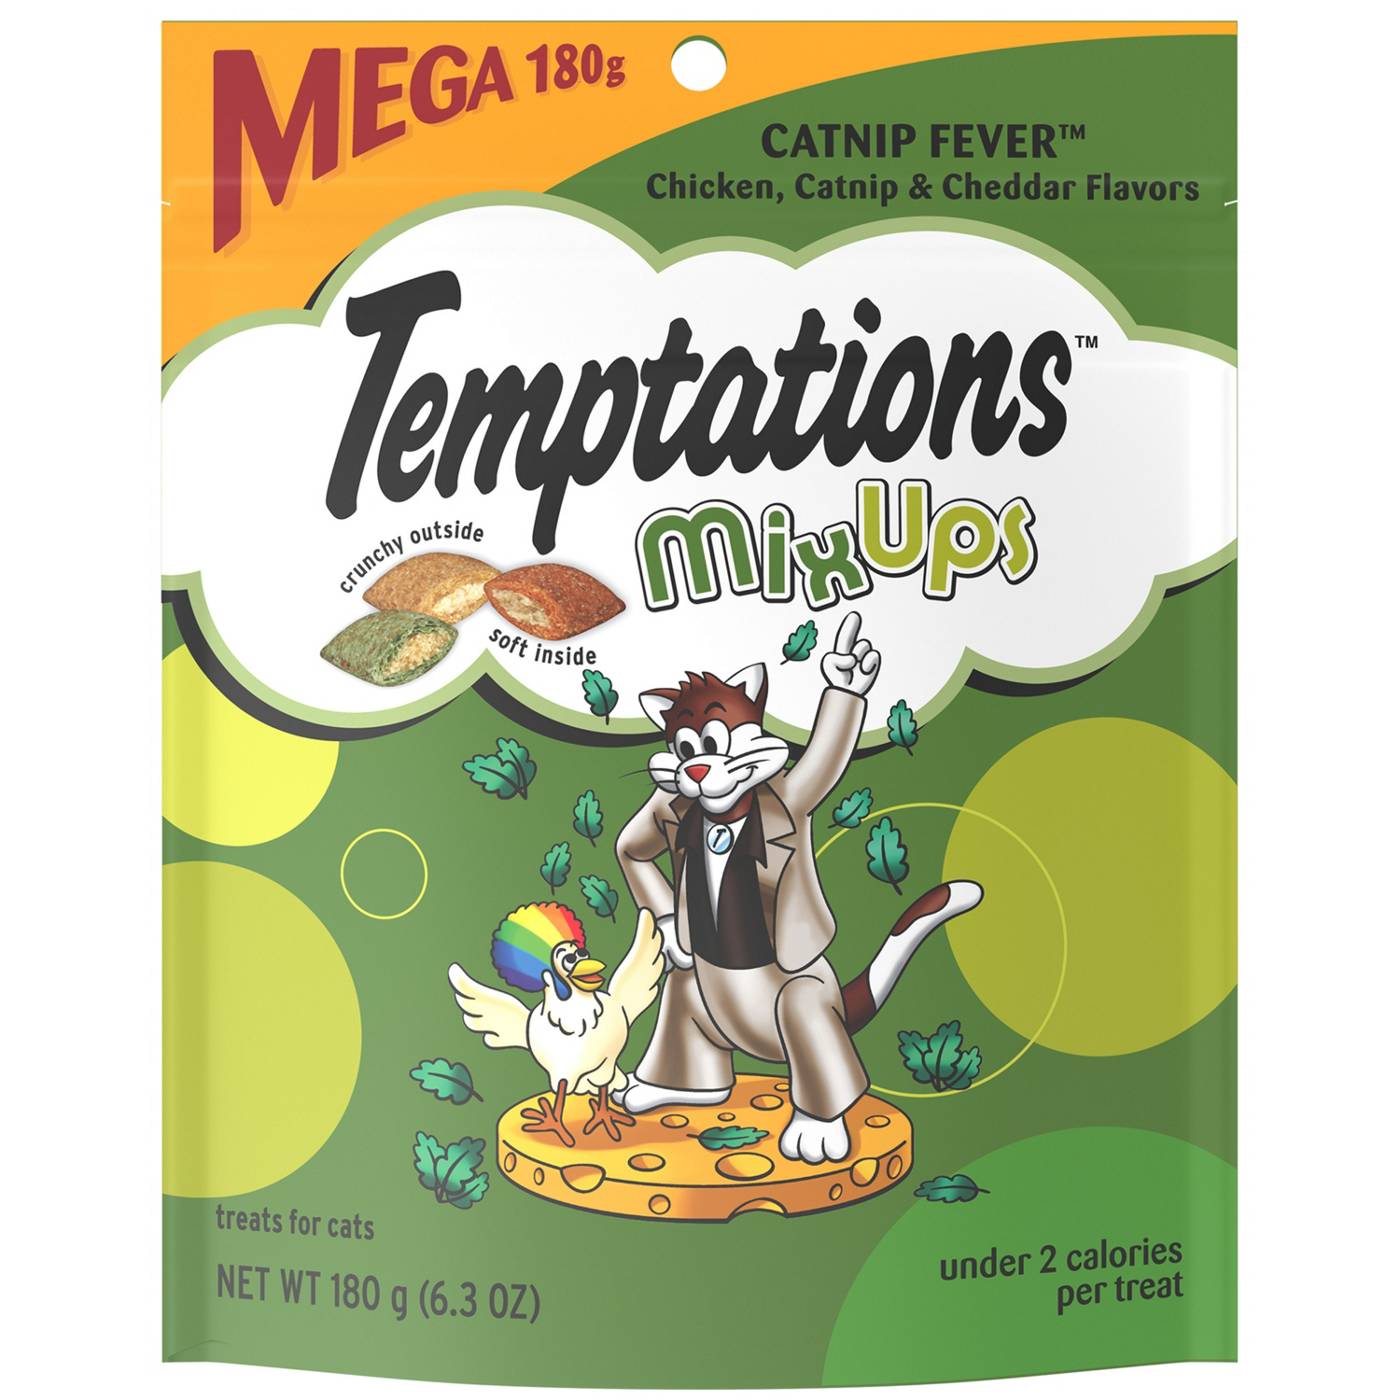 Temptations MixUps Crunchy and Soft Cat Treats Catnip Fever Flavor; image 1 of 5